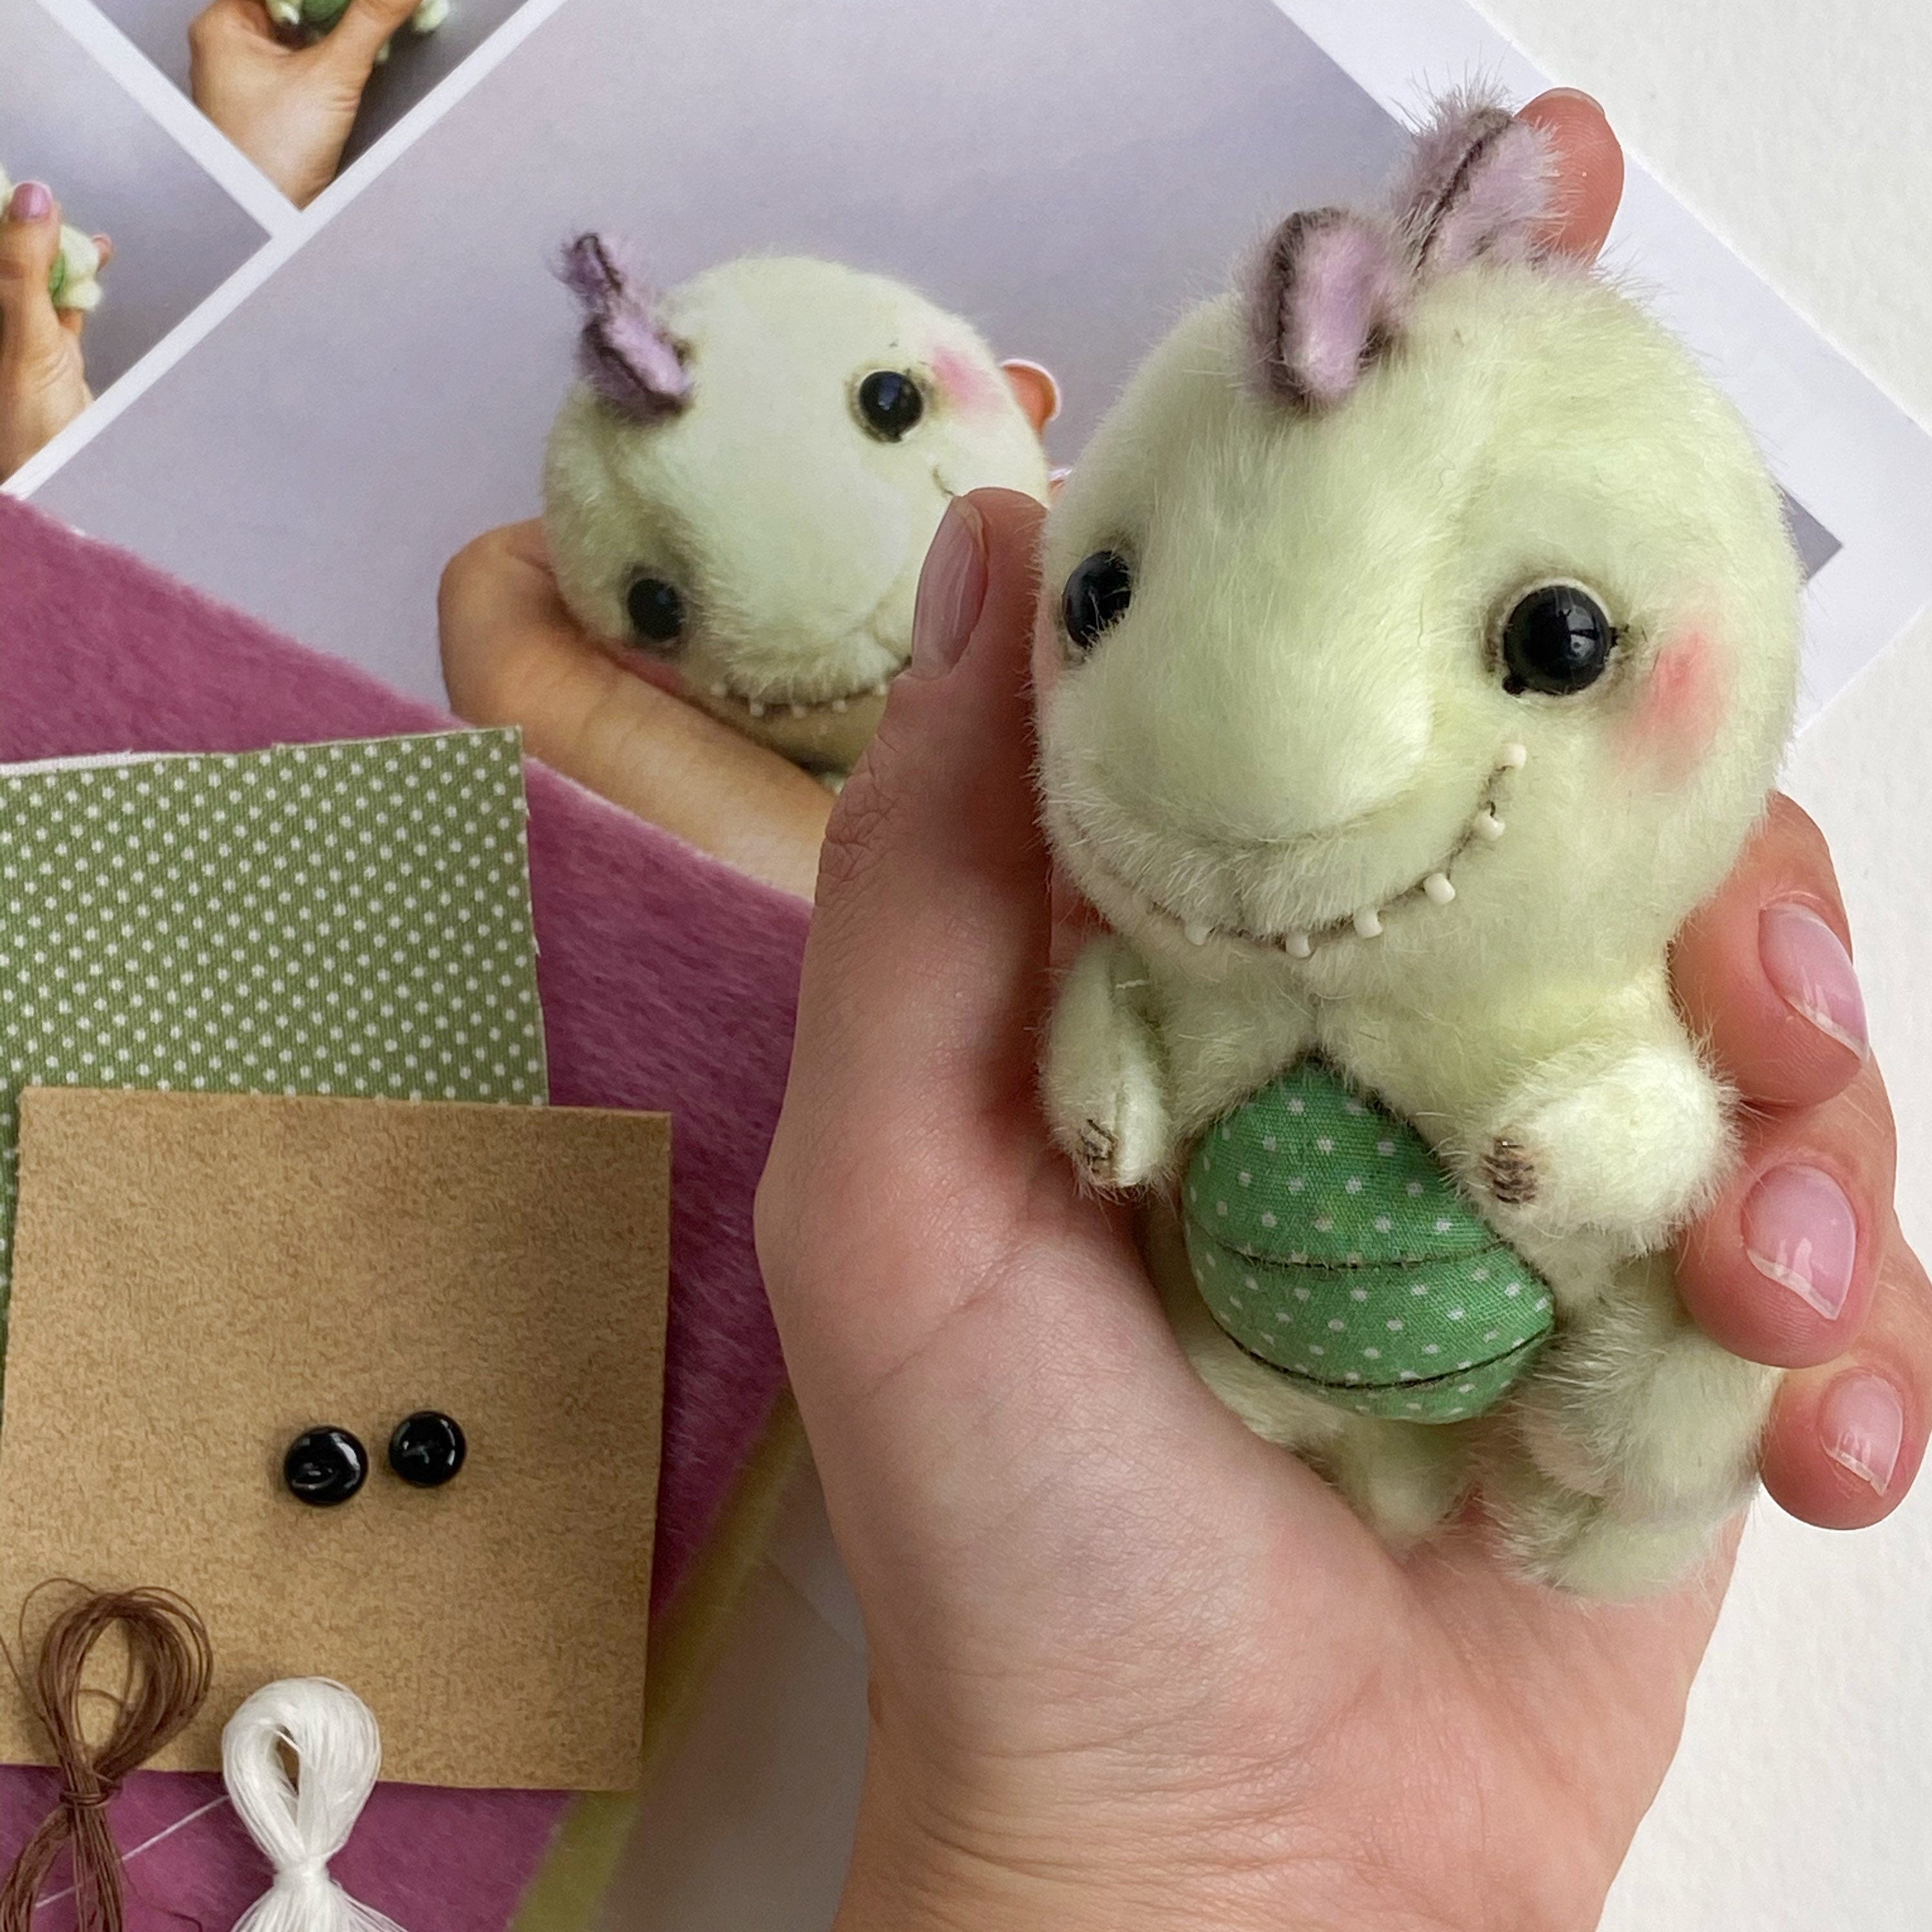 TRex dinosaur - Sewing KIT, Video tutorial DIY stuffed toy pattern, Xmas gift, Christmas tree decoration, softie plushie craft kit for adult